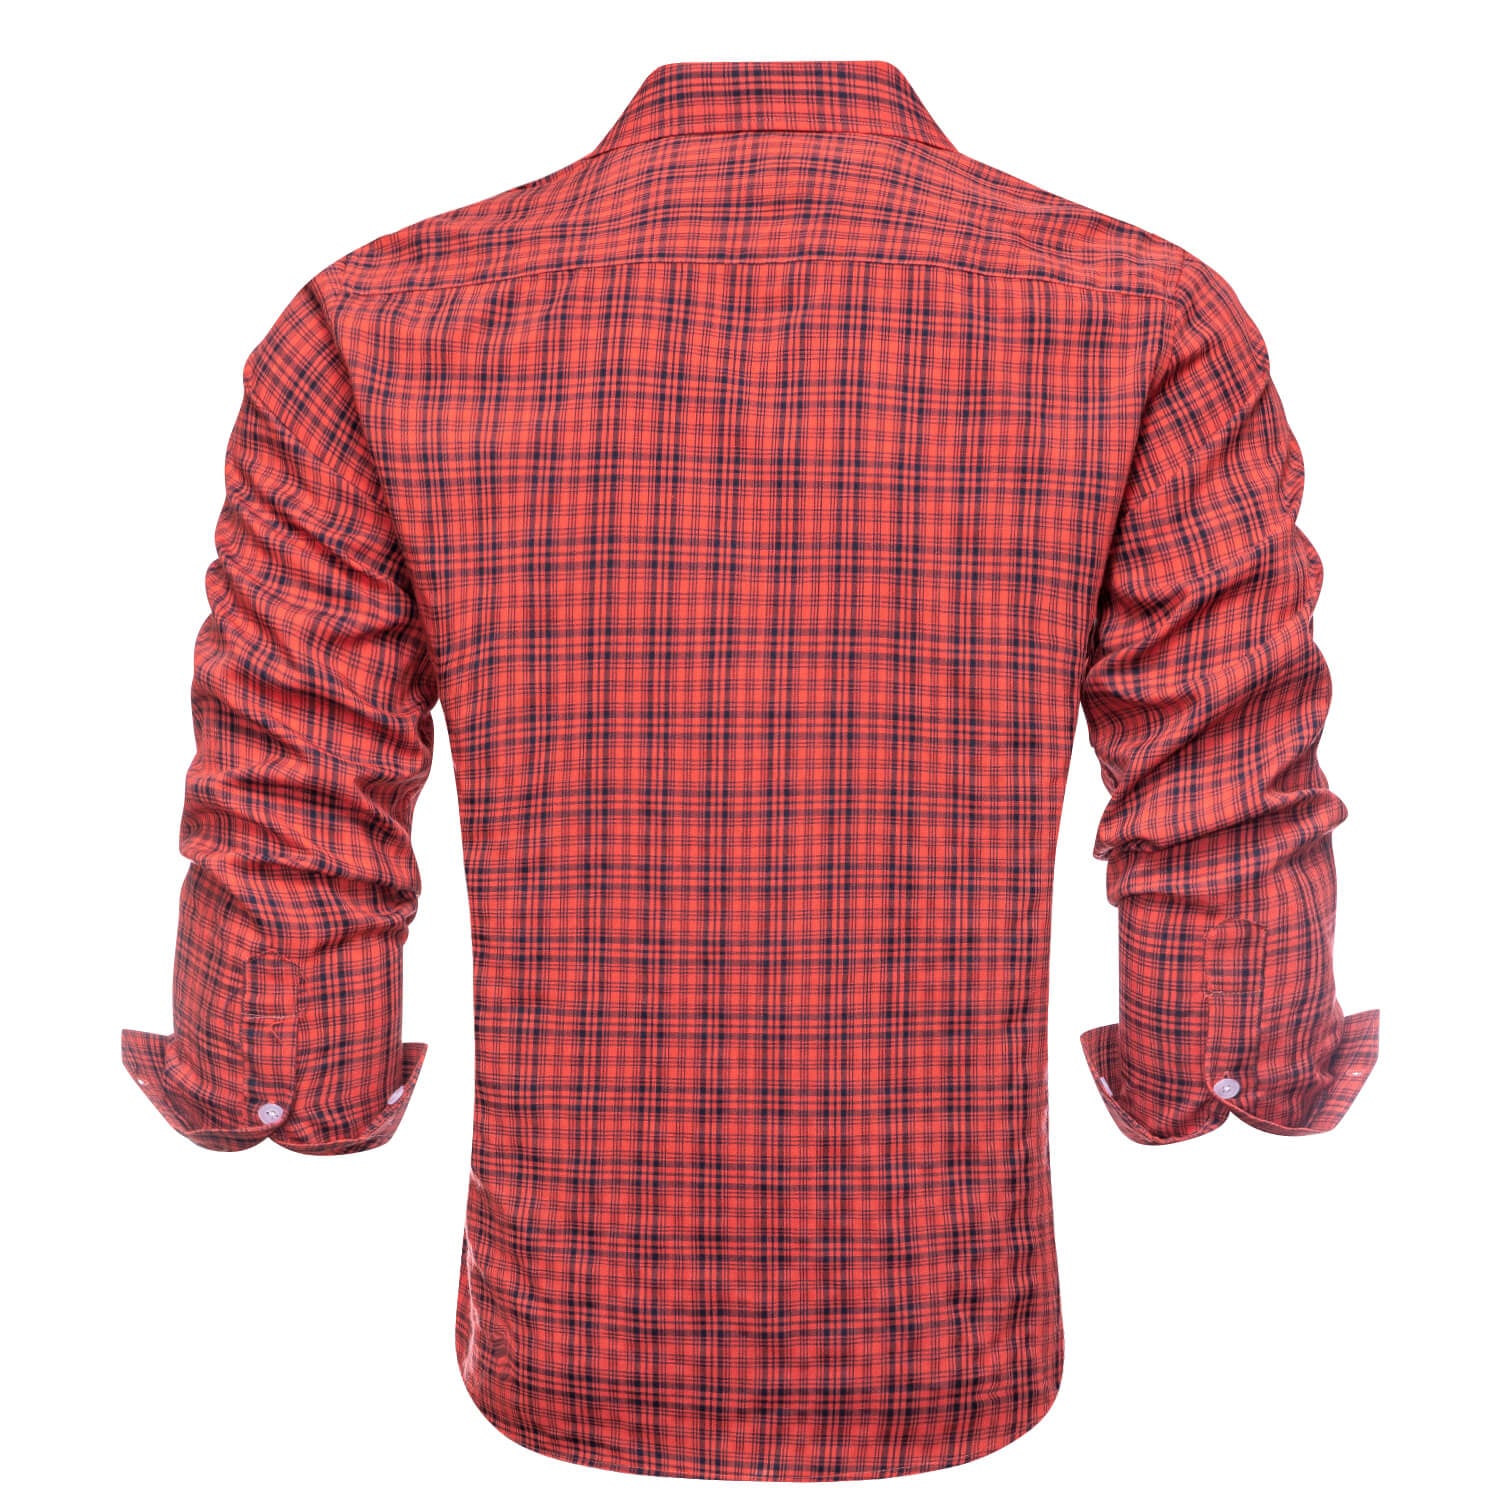 Hi-Tie Button Down Shirt Red Blue Plaid Silk Men's Shirt Classic